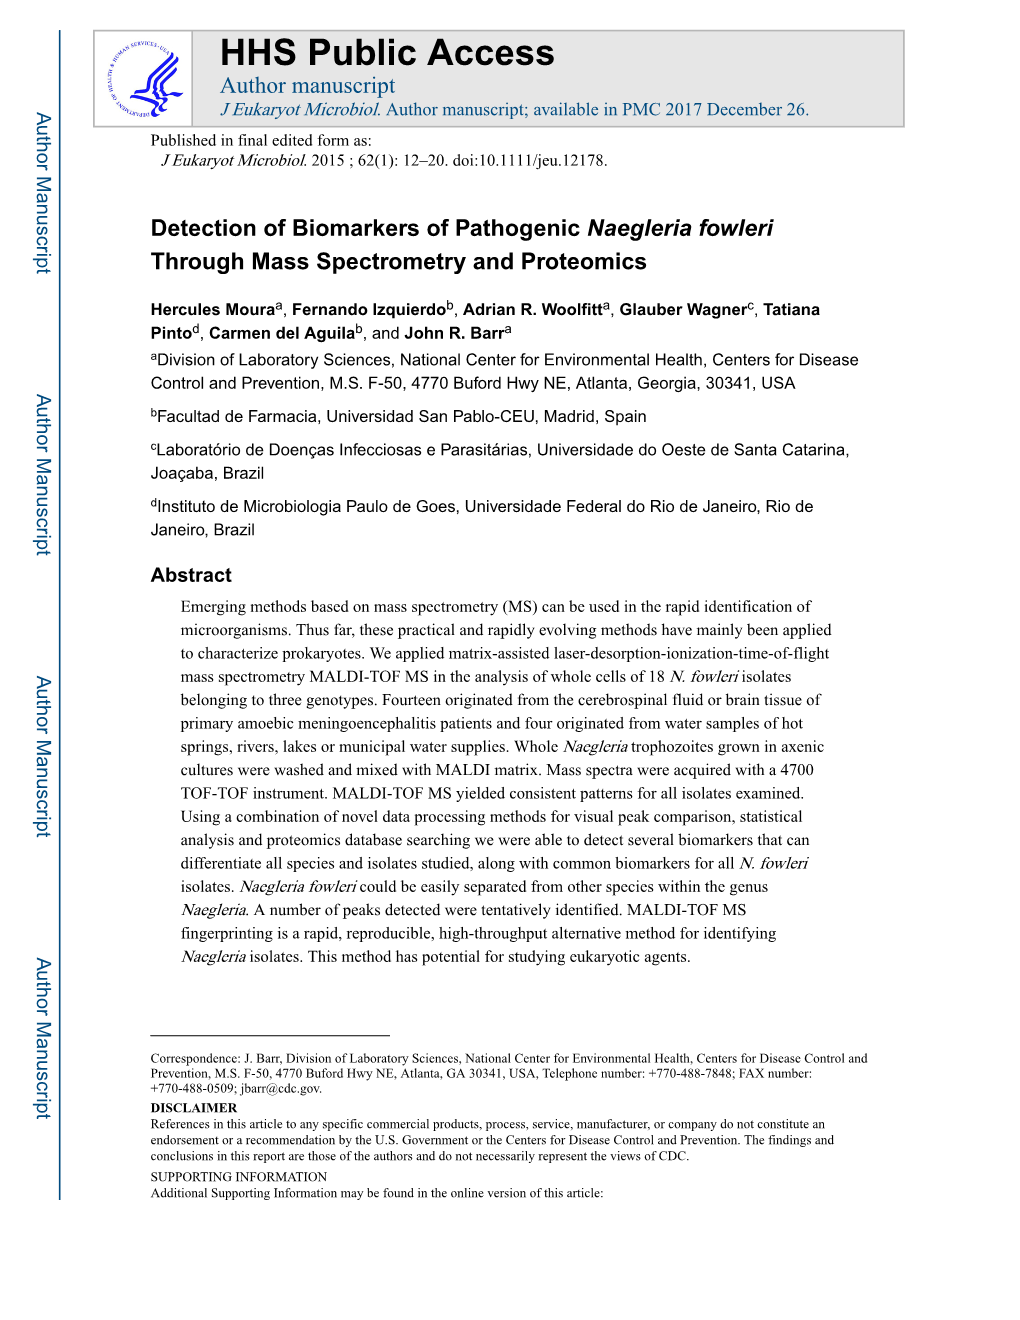 Detection of Biomarkers of Pathogenic Naegleria Fowleri Through Mass Spectrometry and Proteomics